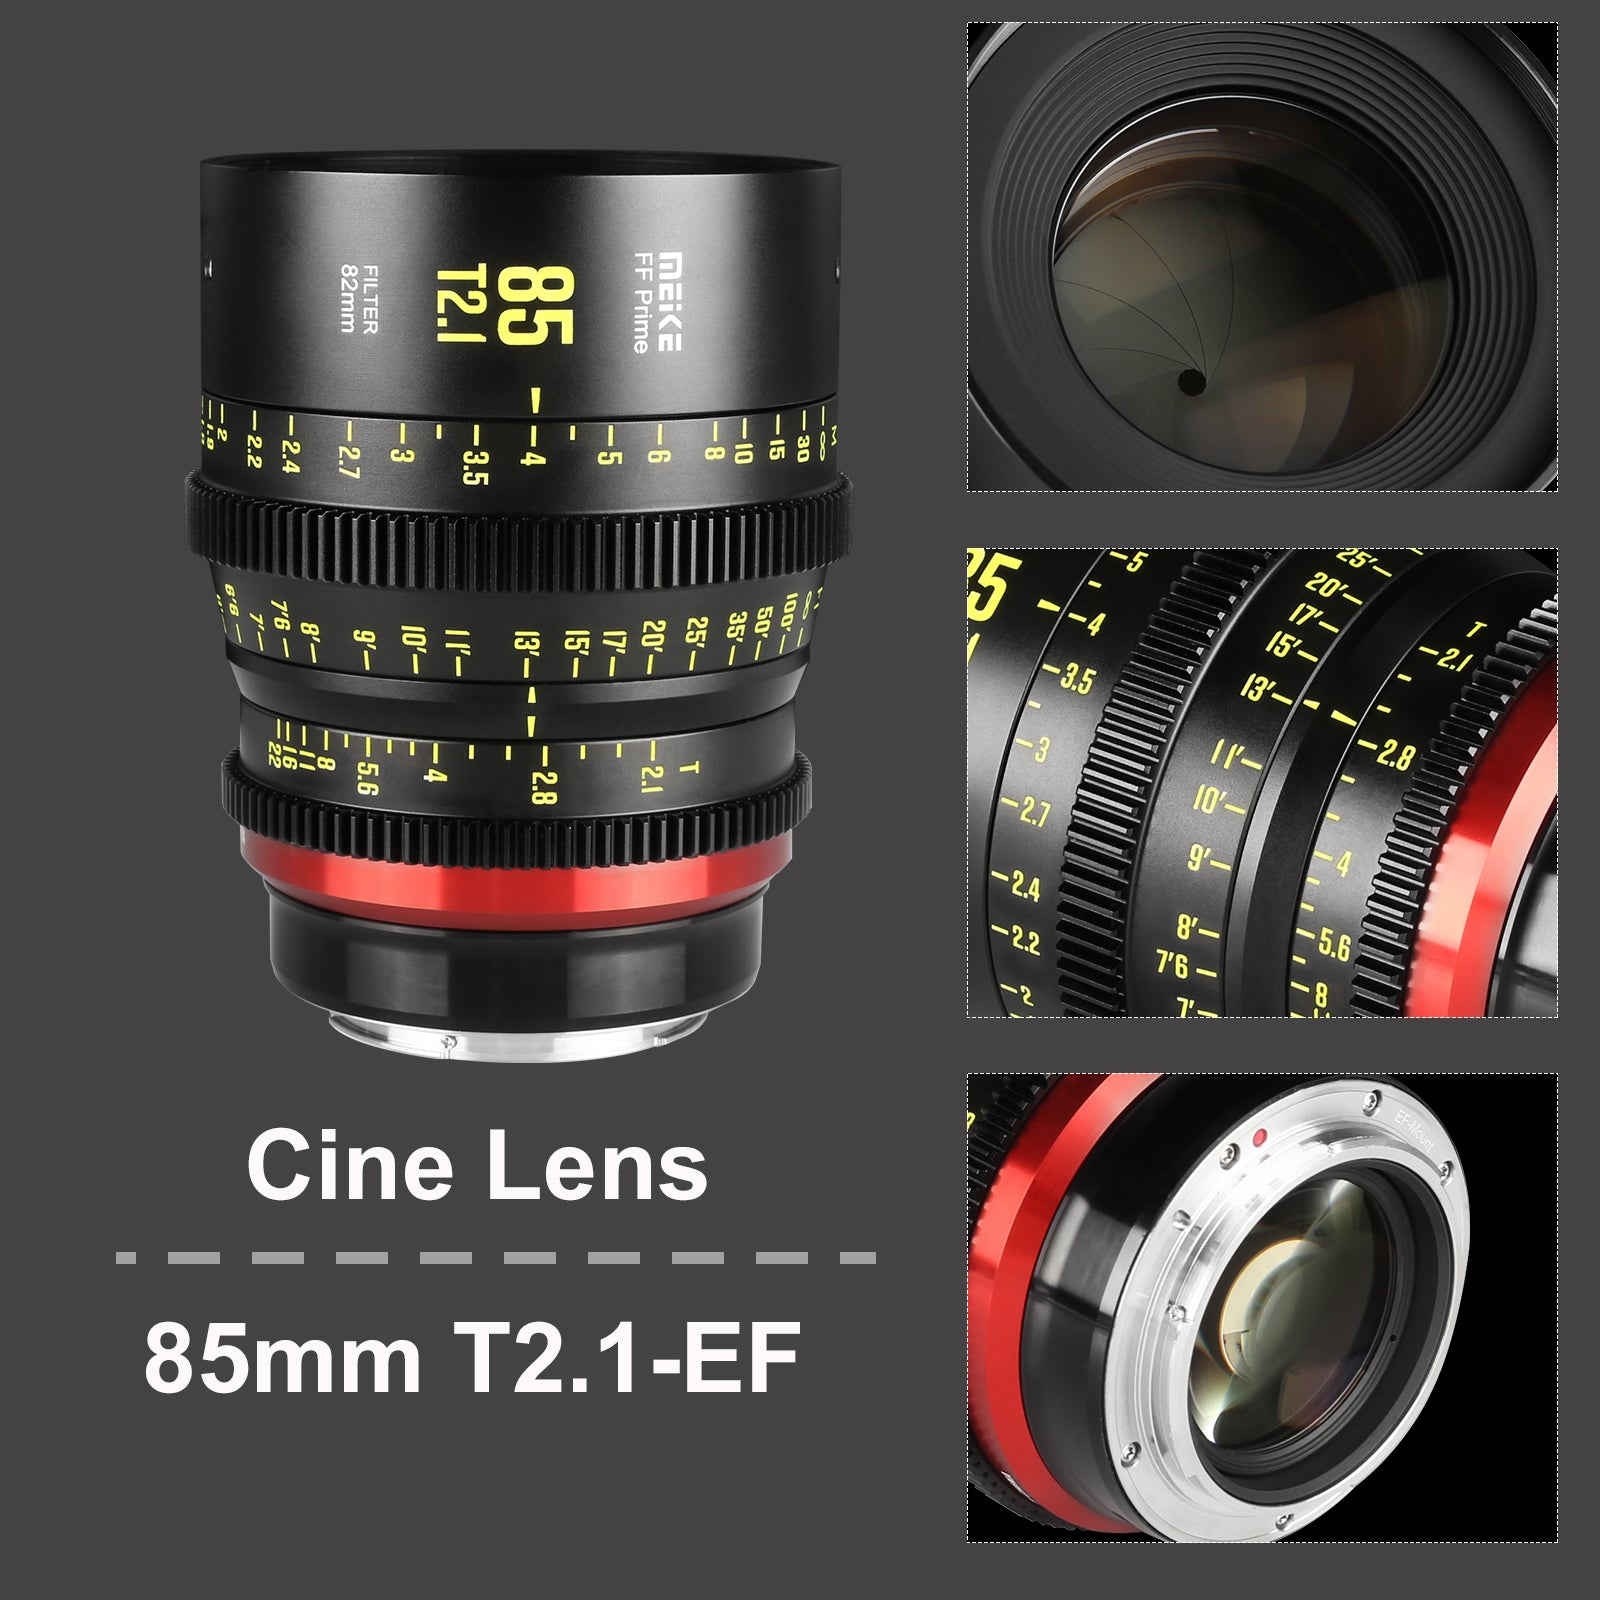 Meike Cinema Full Frame Cinema Prime 85mm T2.1 Lens (Canon RF Mount) in Different Perspectives